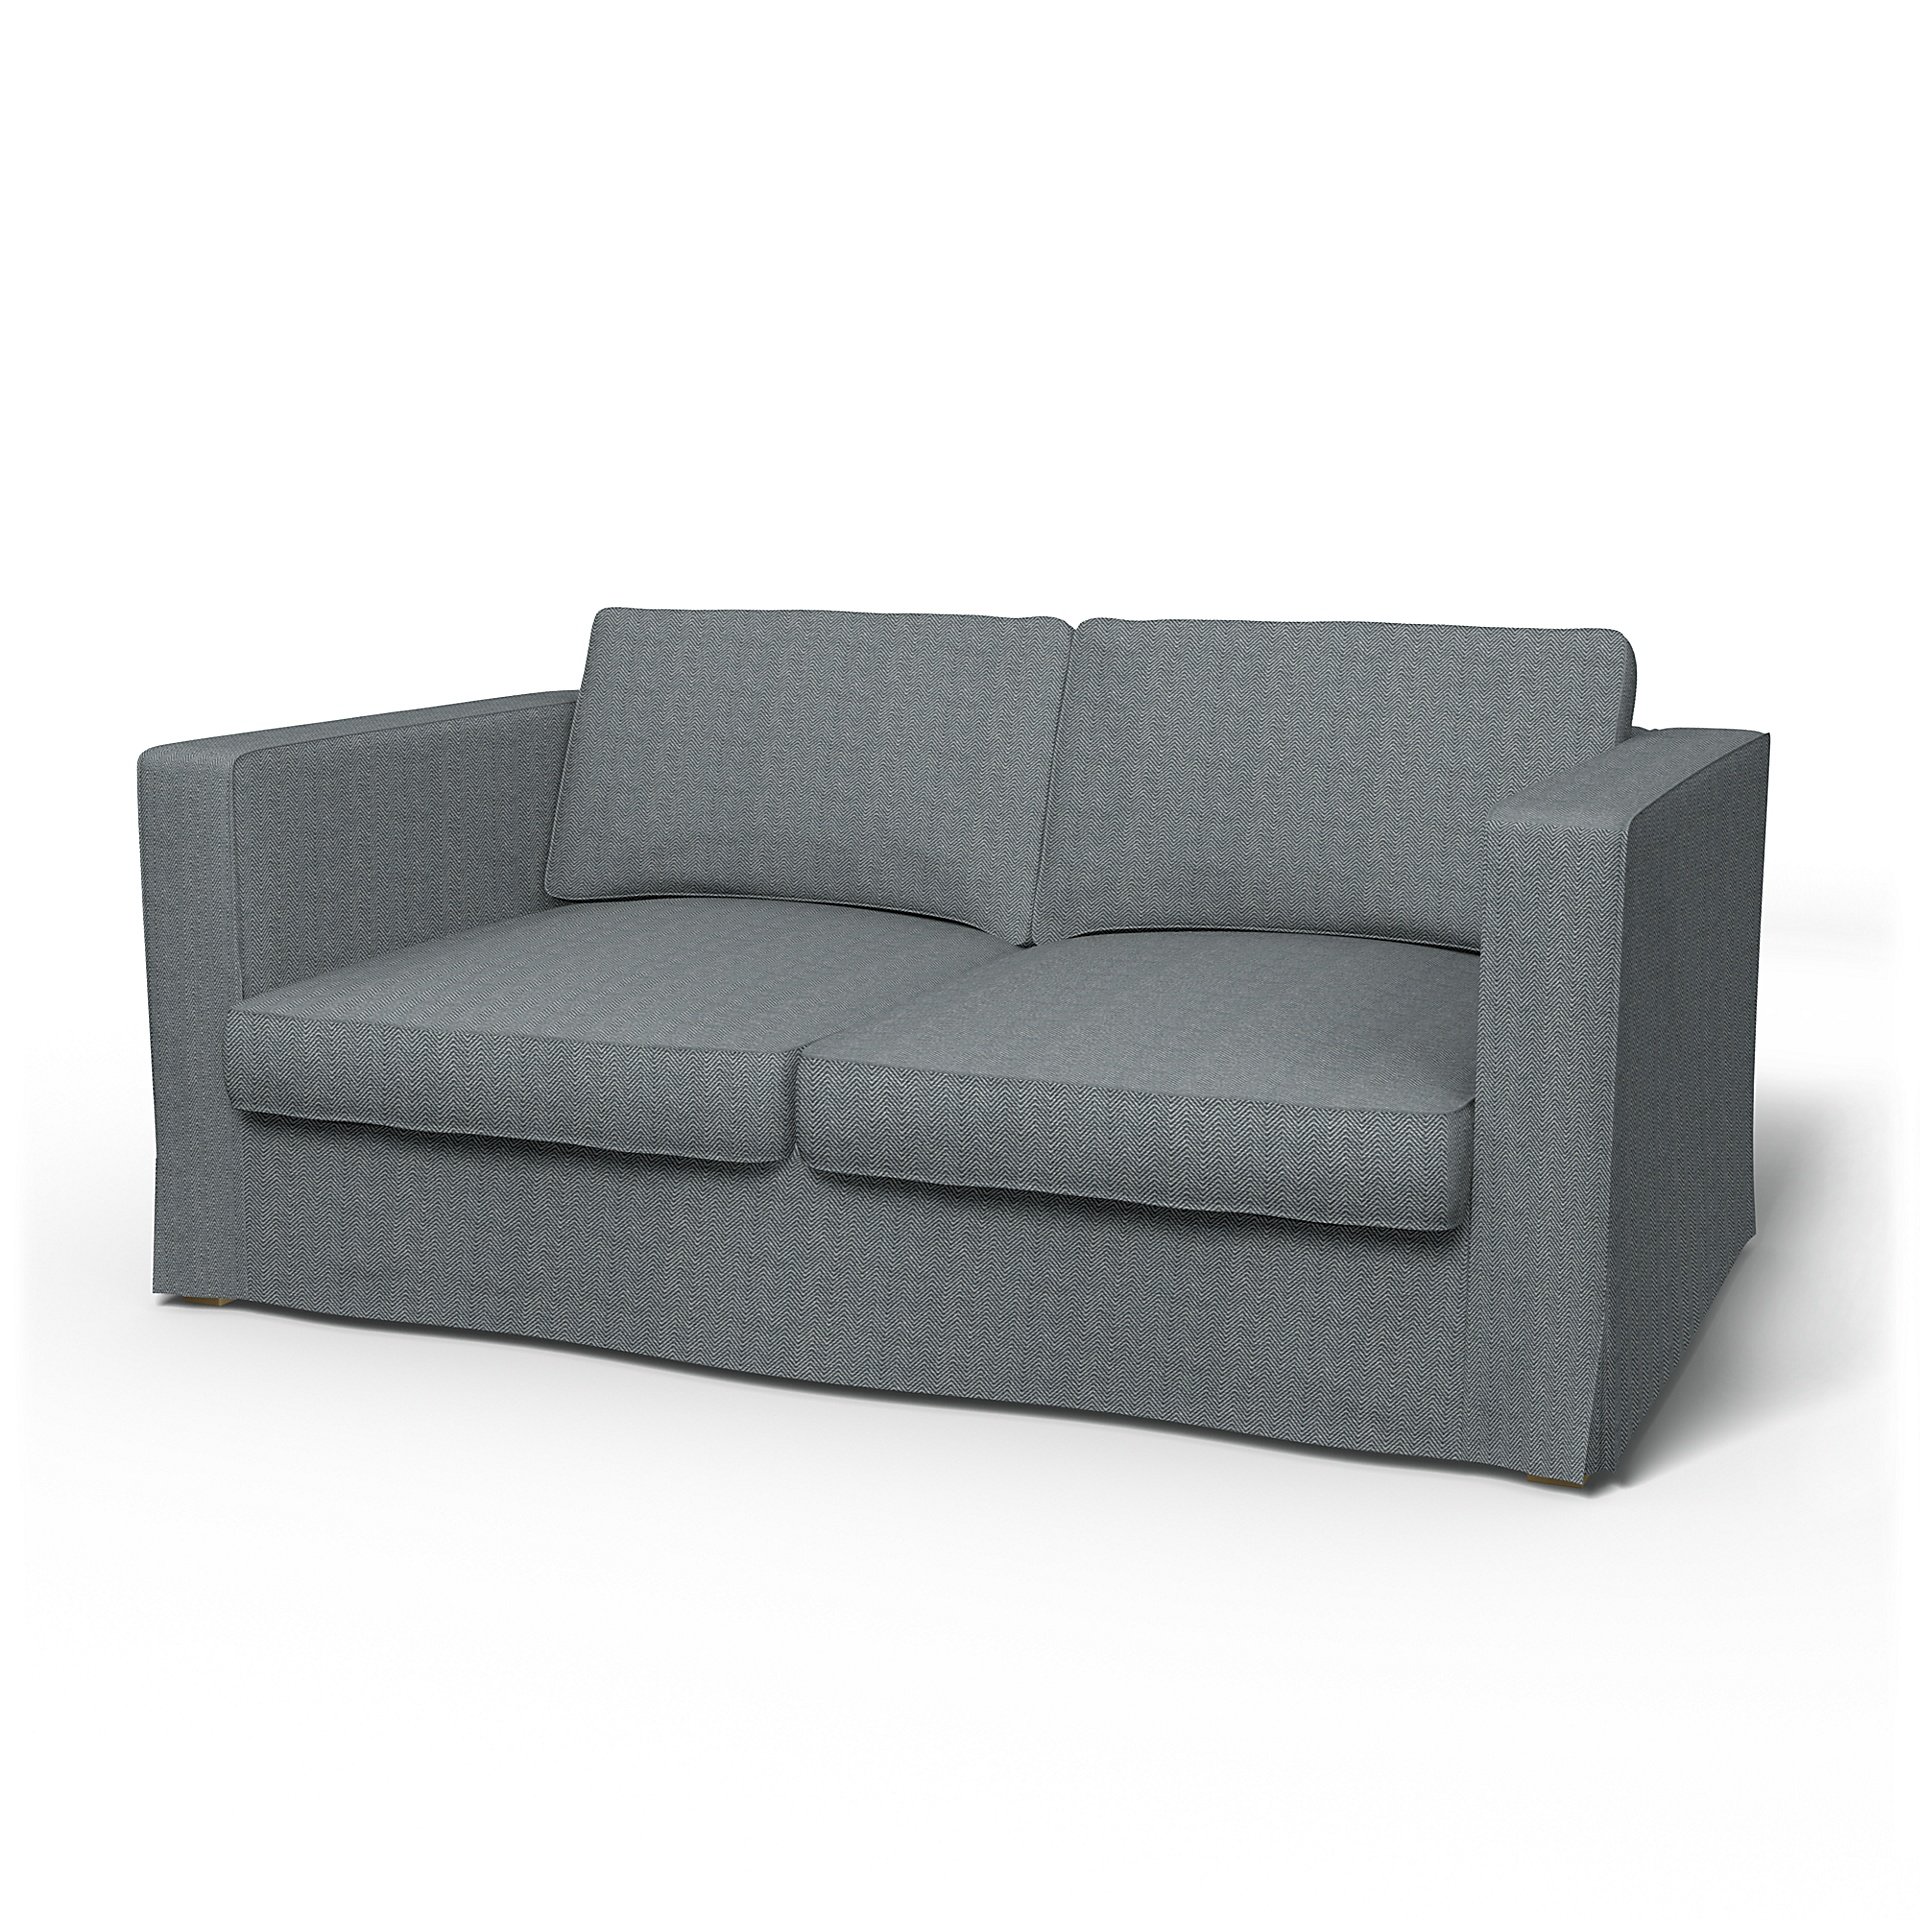 IKEA - Karlstad 2 Seater Sofa Cover, Denim, Cotton - Bemz